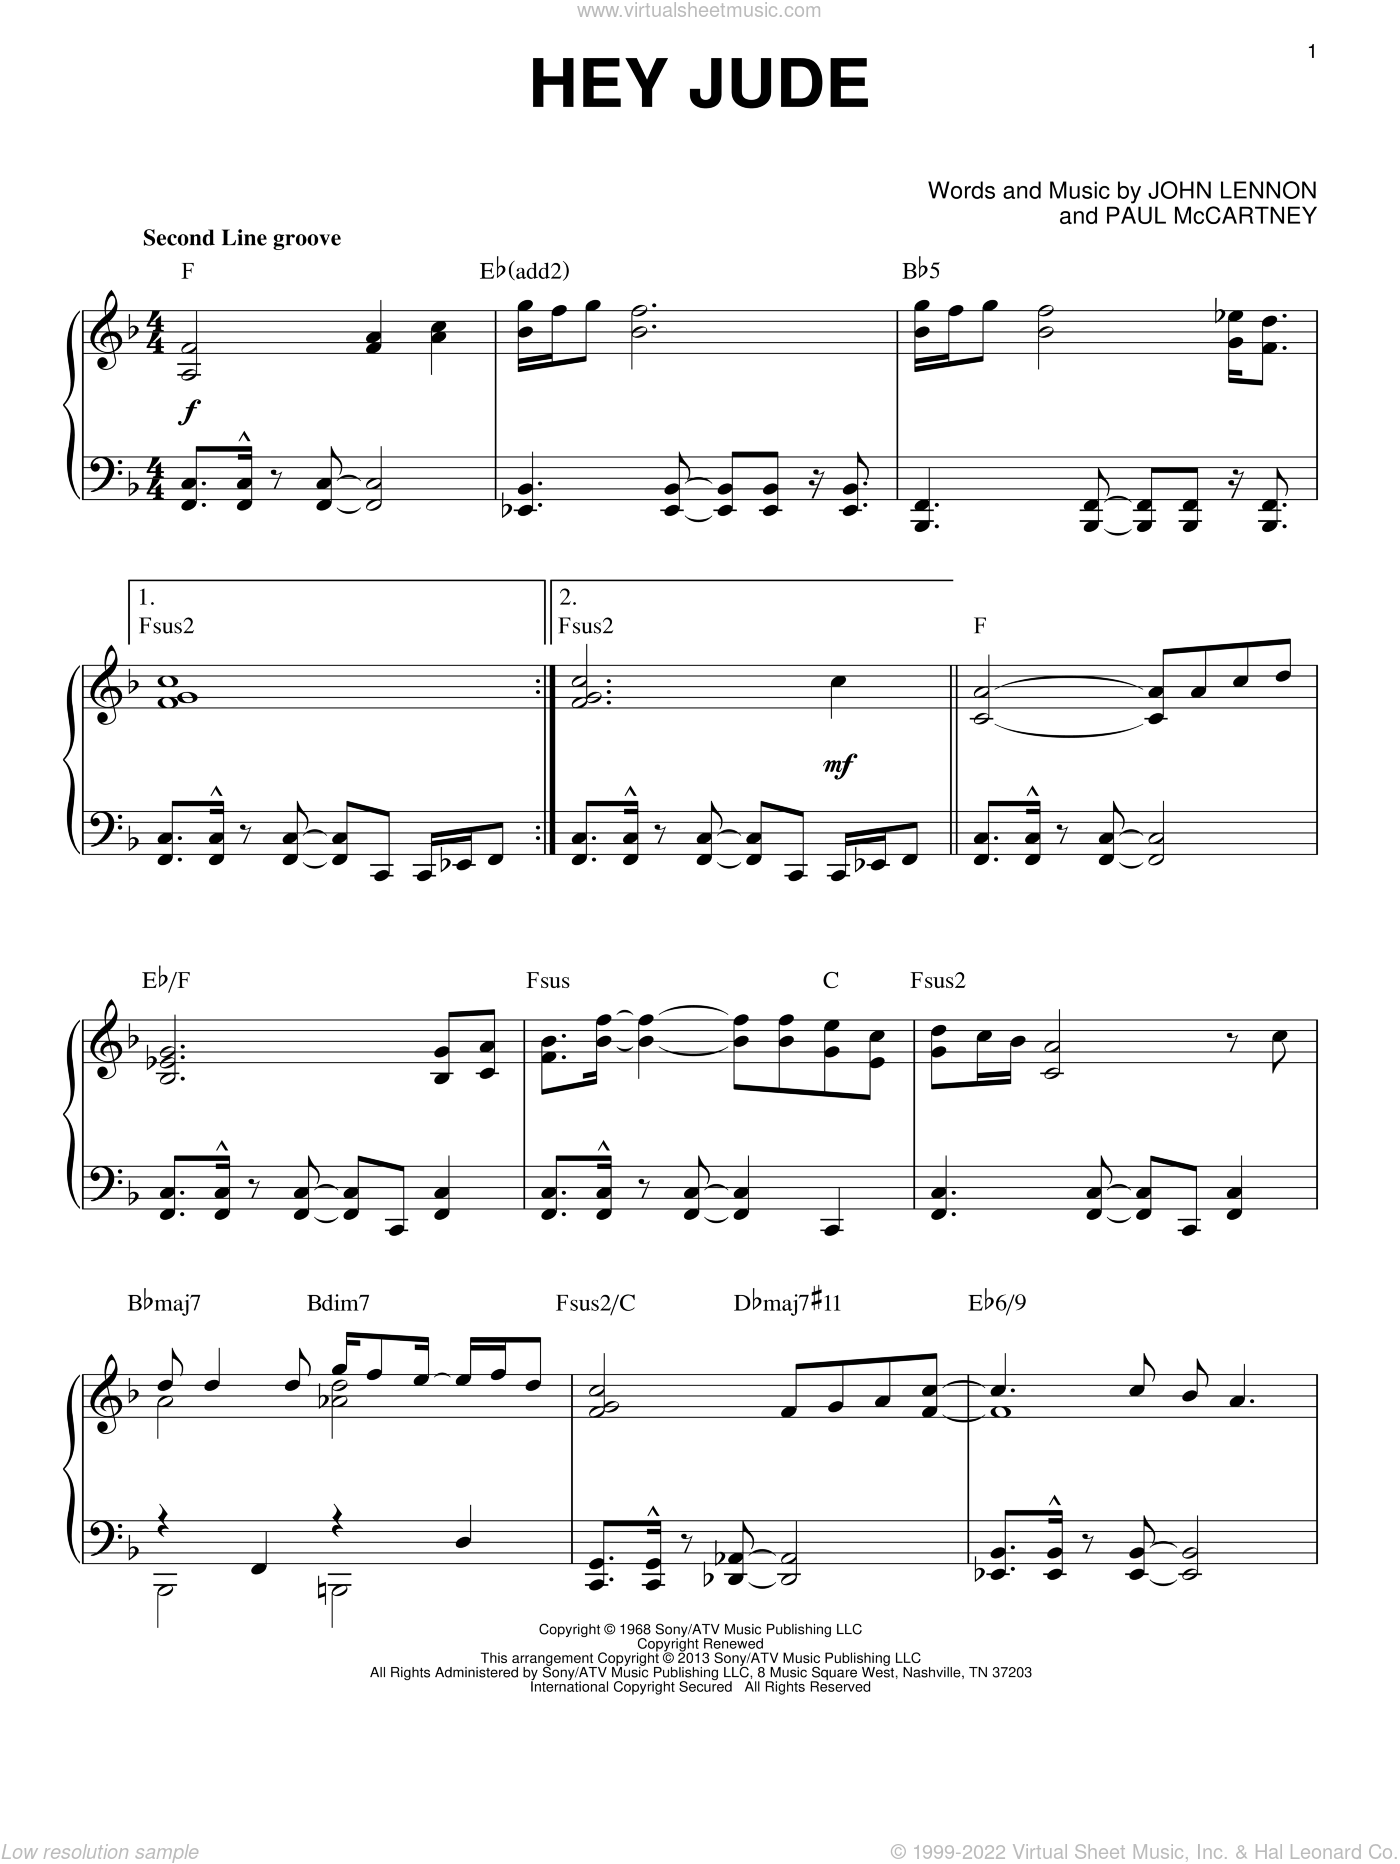 Hey Joe [Jazz version] sheet music for piano solo (PDF)